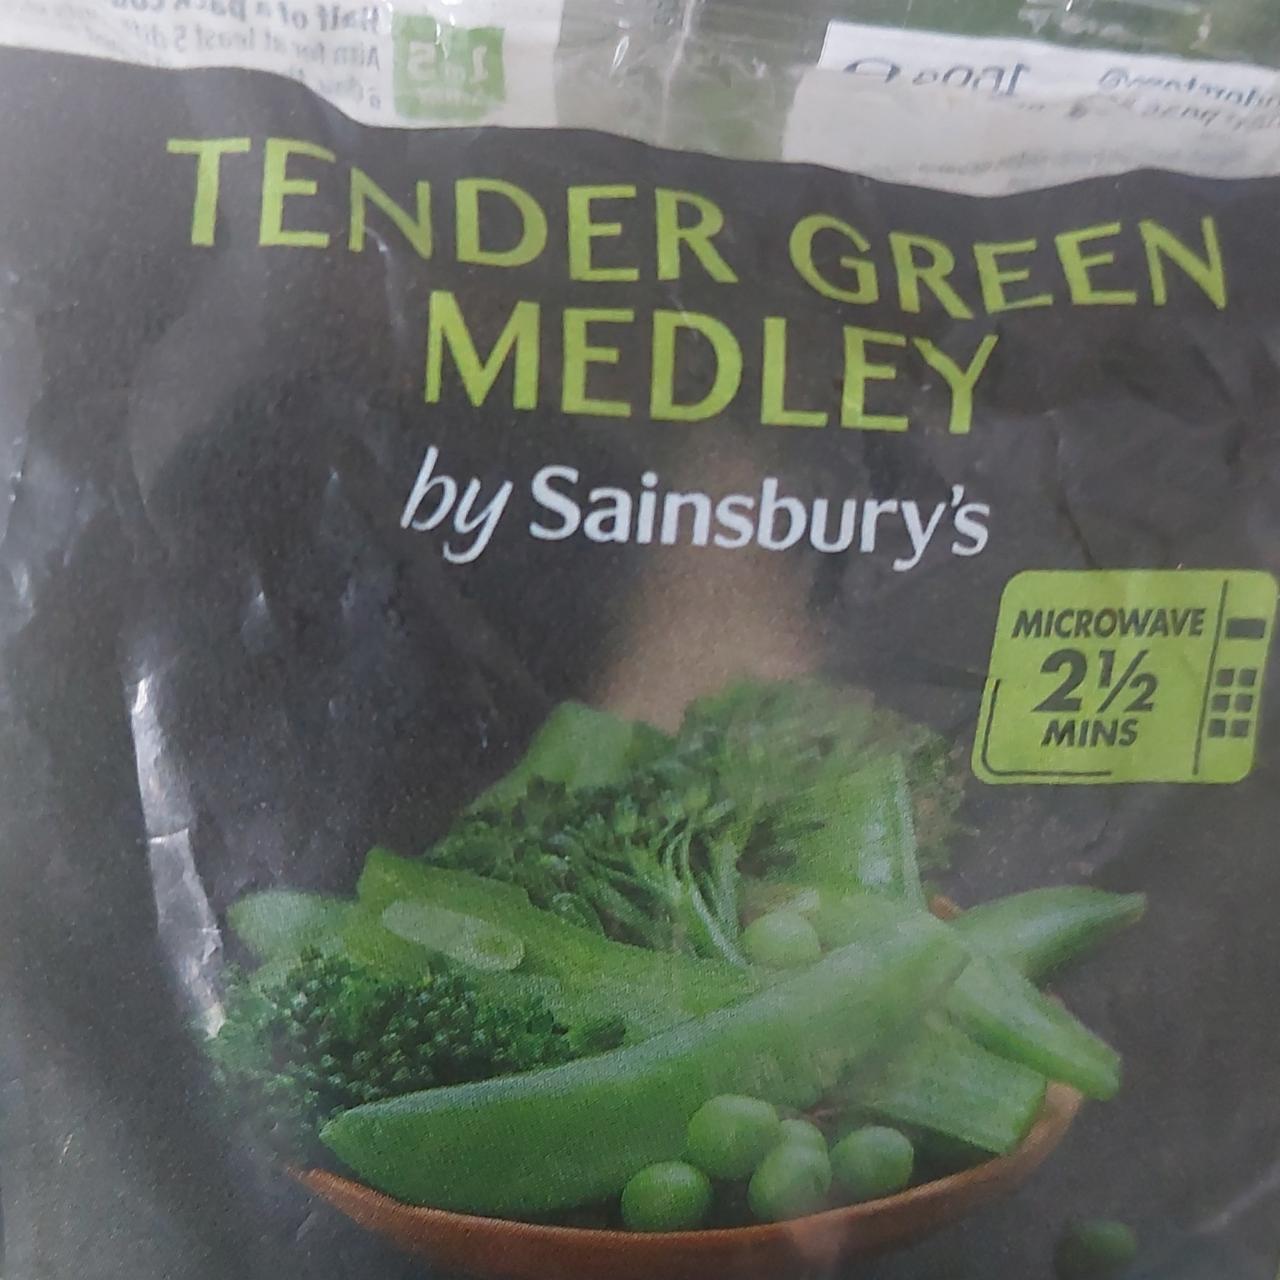 Zdjęcia - Tender green medley Sainsbury's